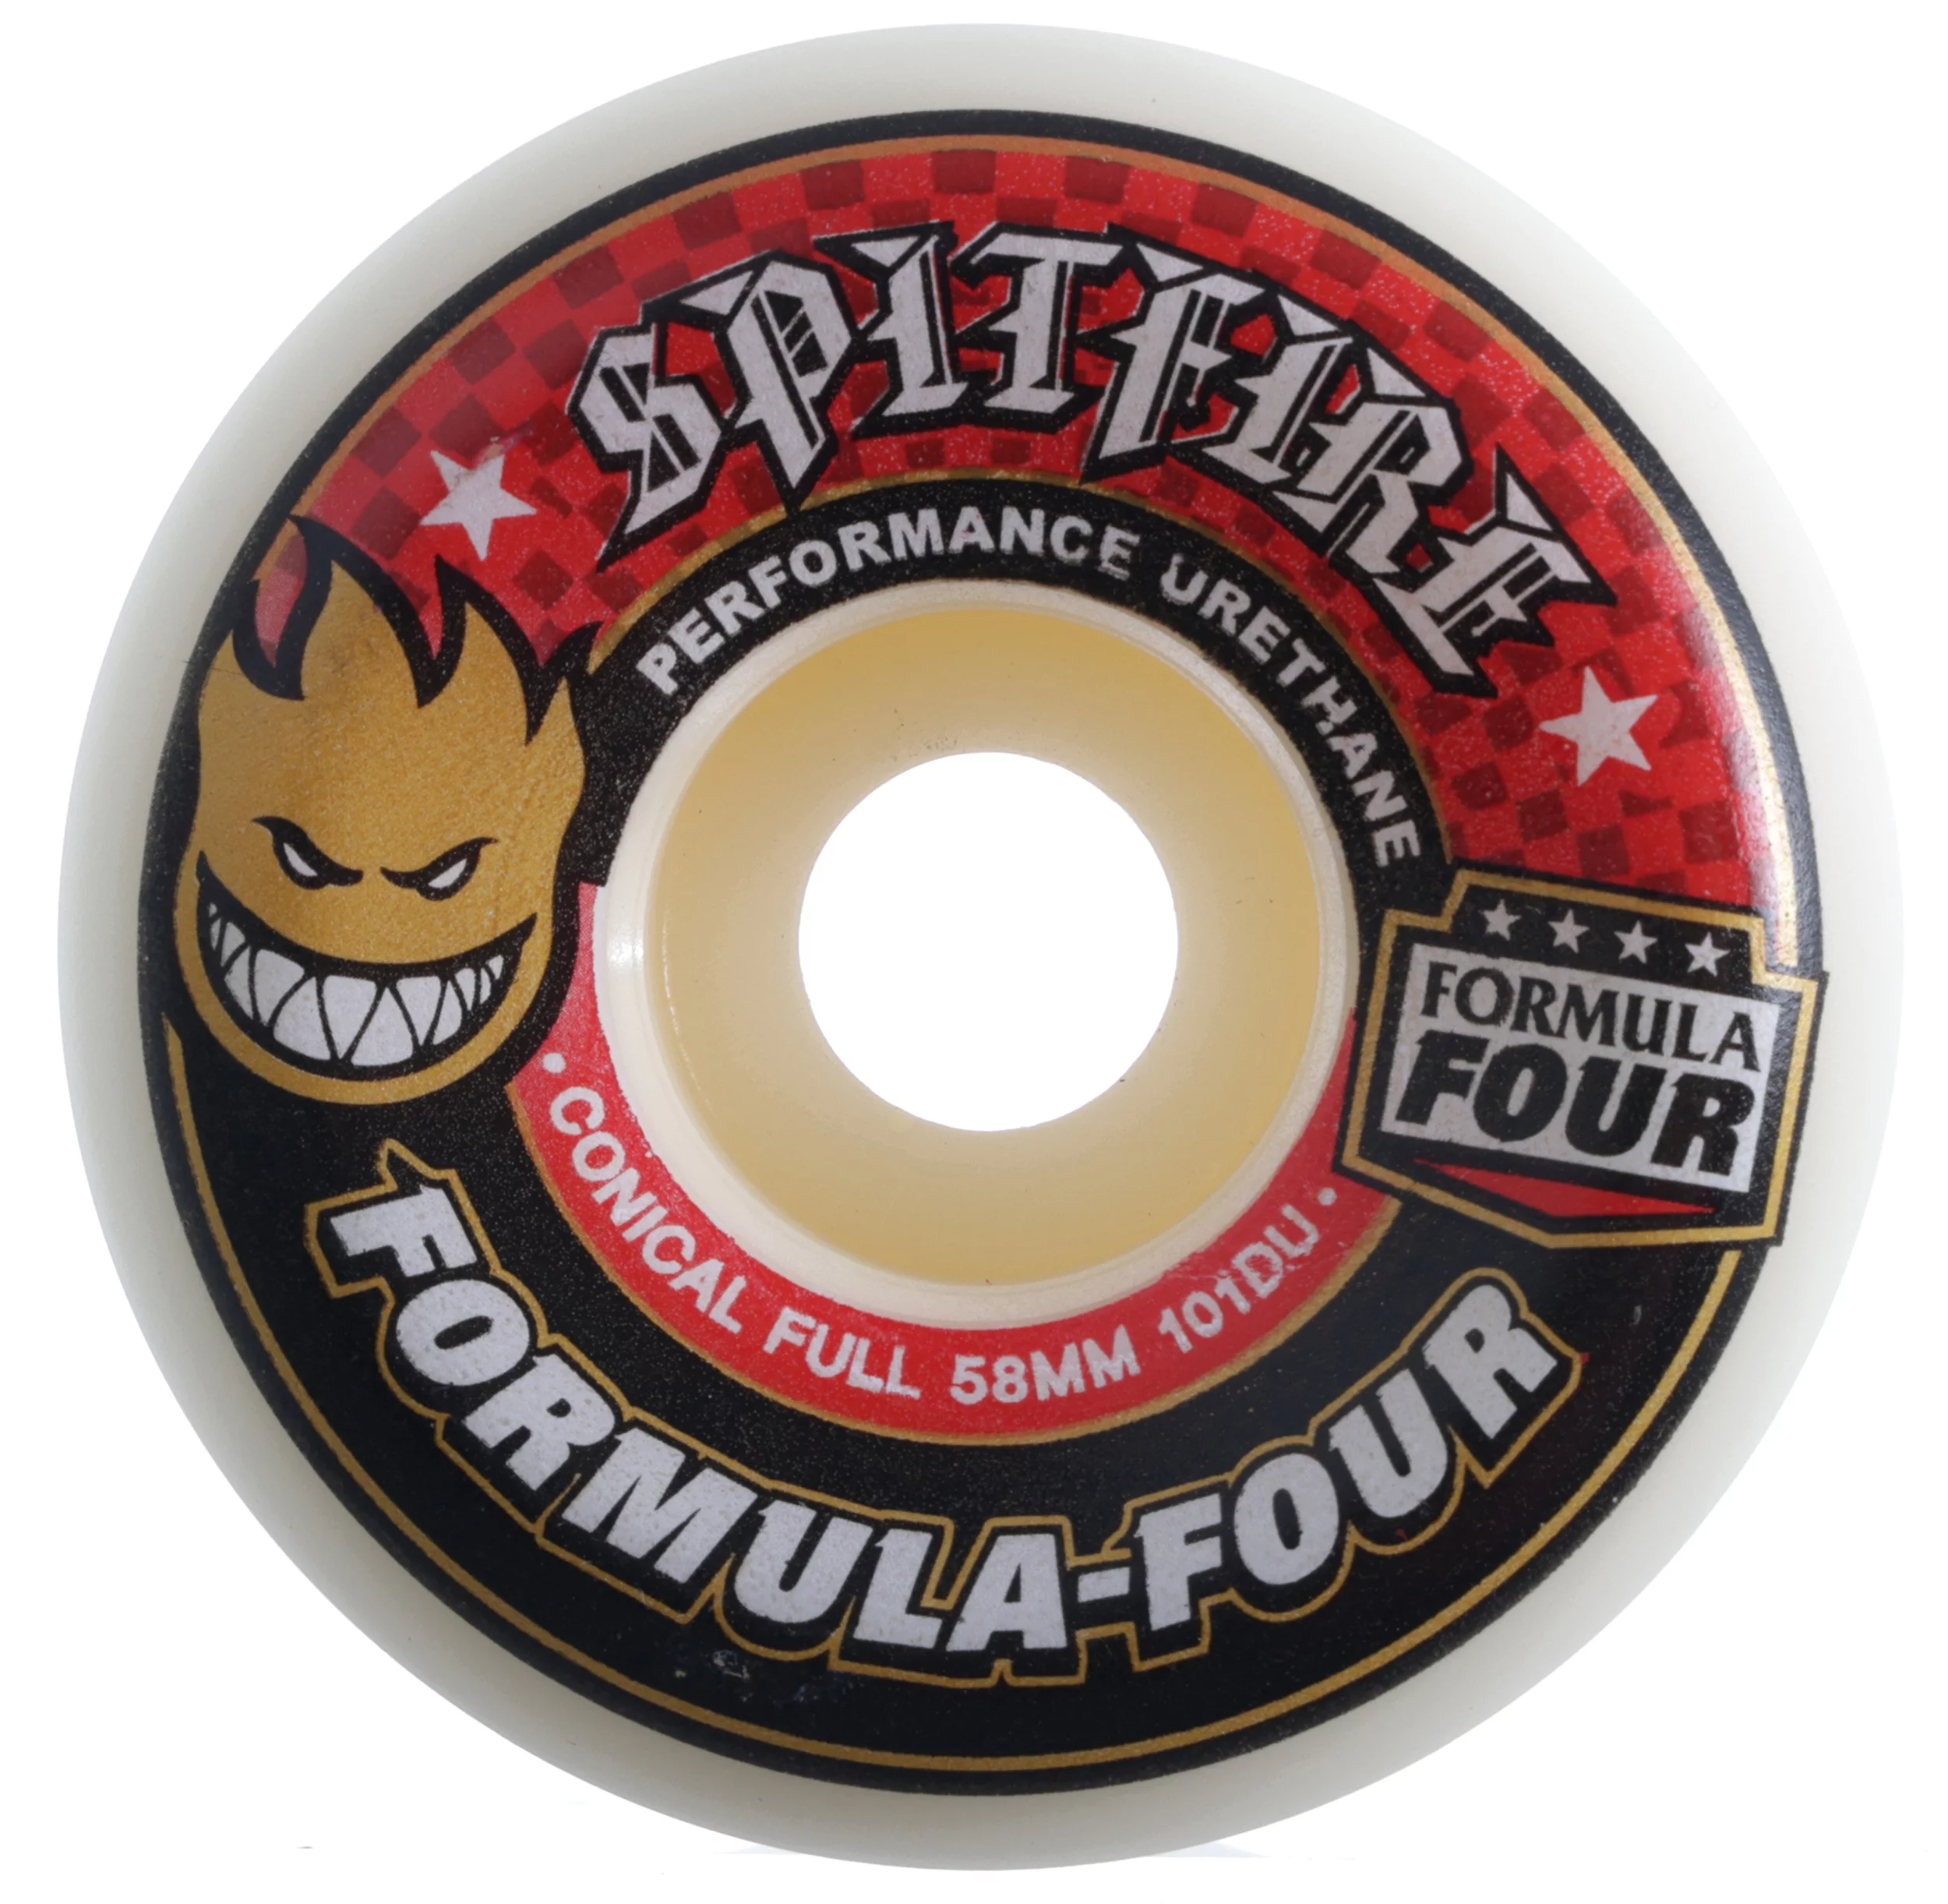 Spitfire Formula Four Conical Full Skateboard Wheels - white (101d